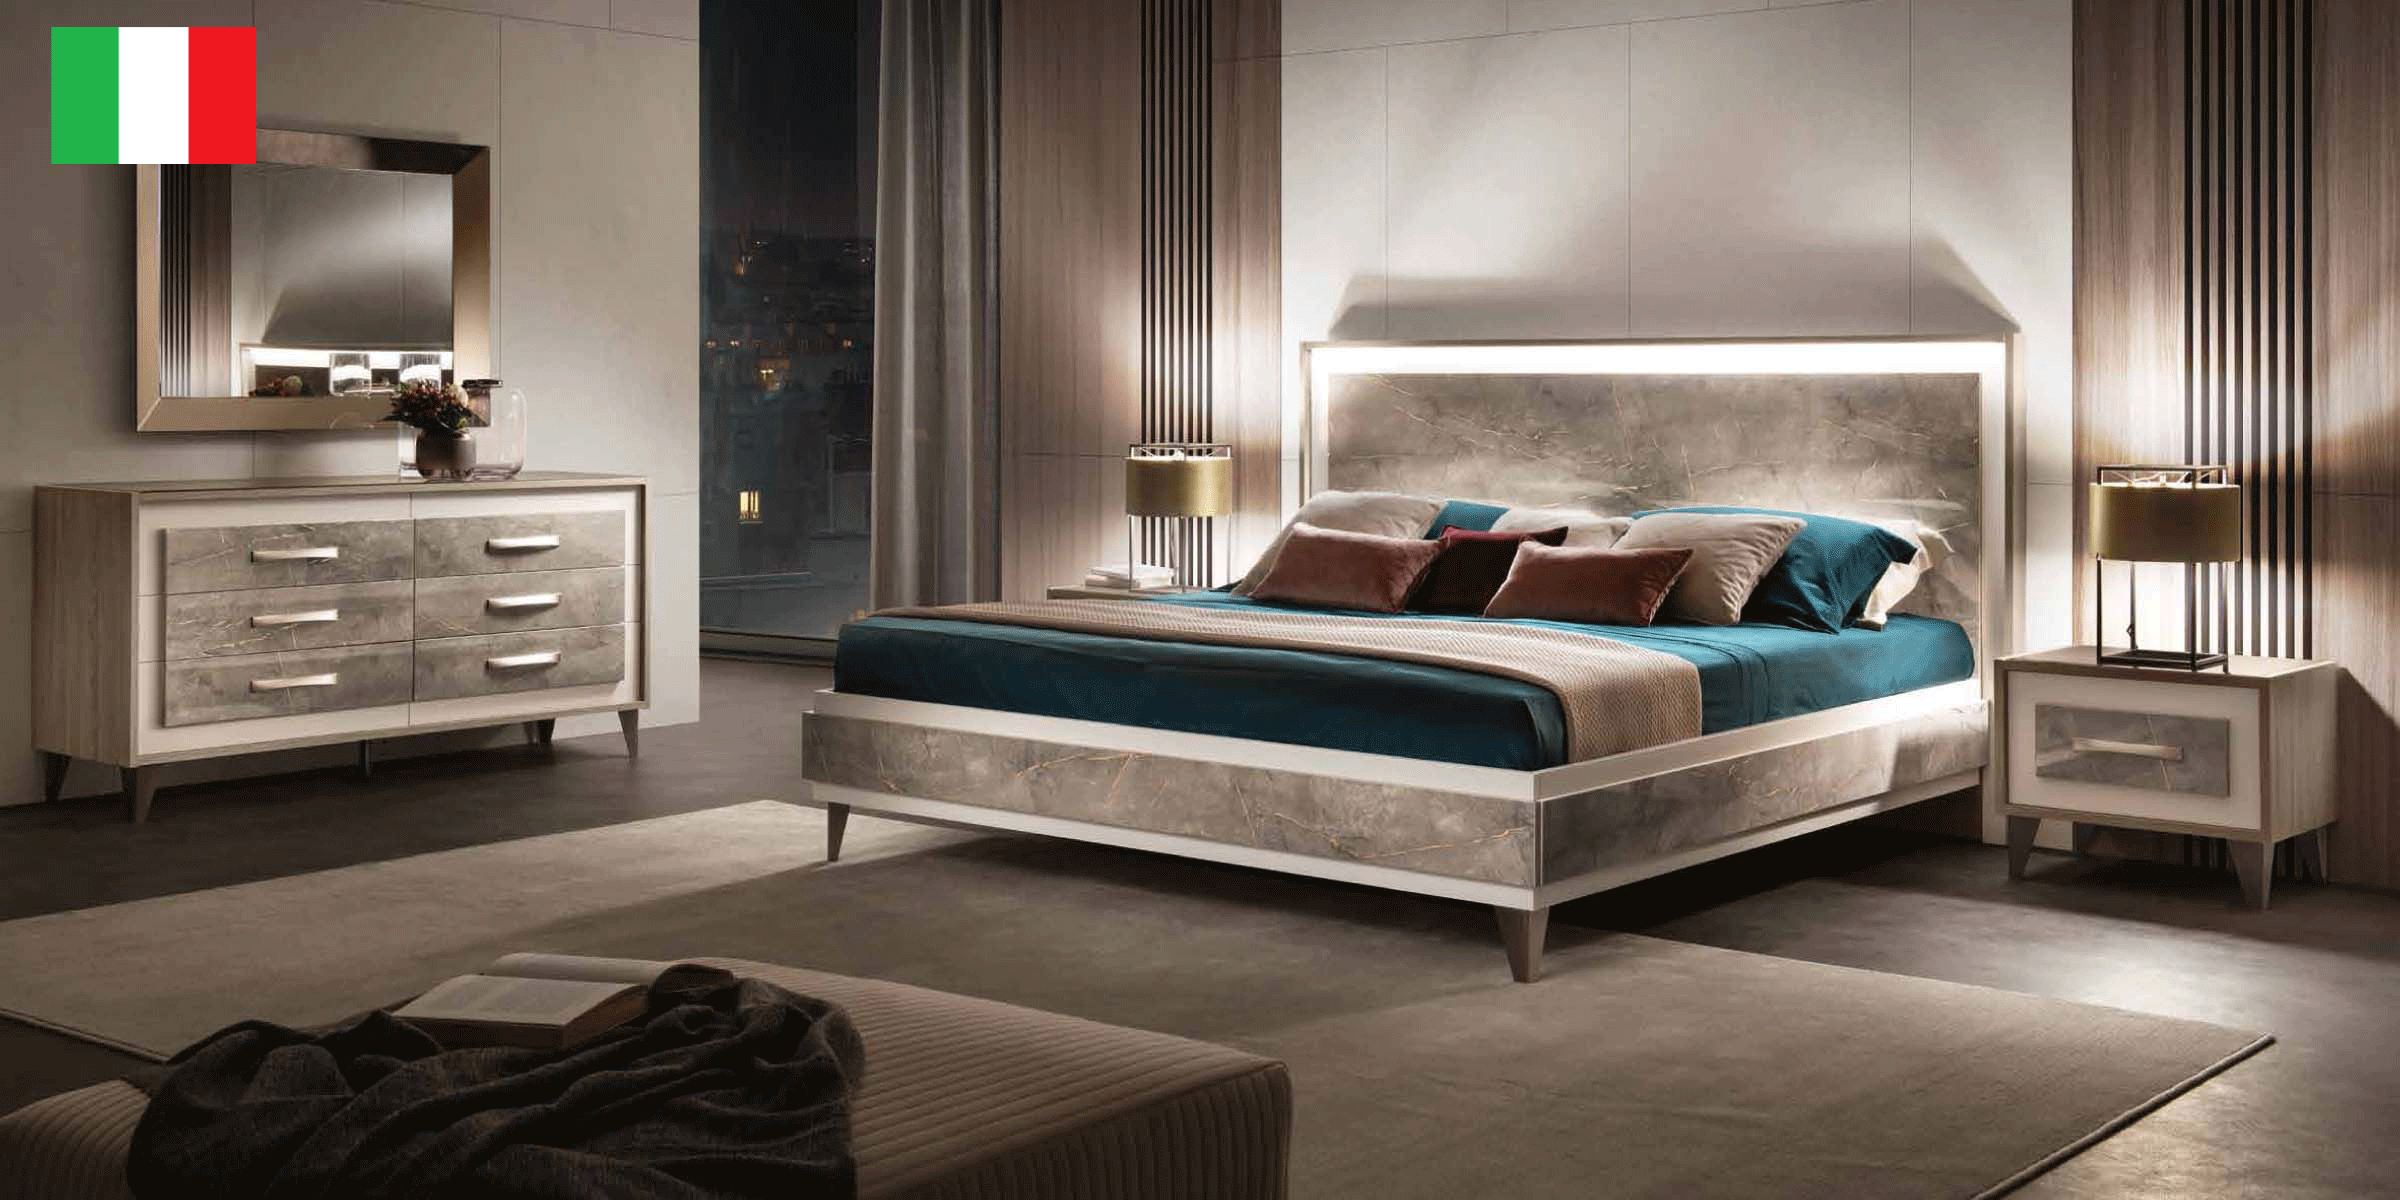 Brands Arredoclassic Living Room, Italy ArredoAmbra Bedroom by Arredoclassic with double dresser